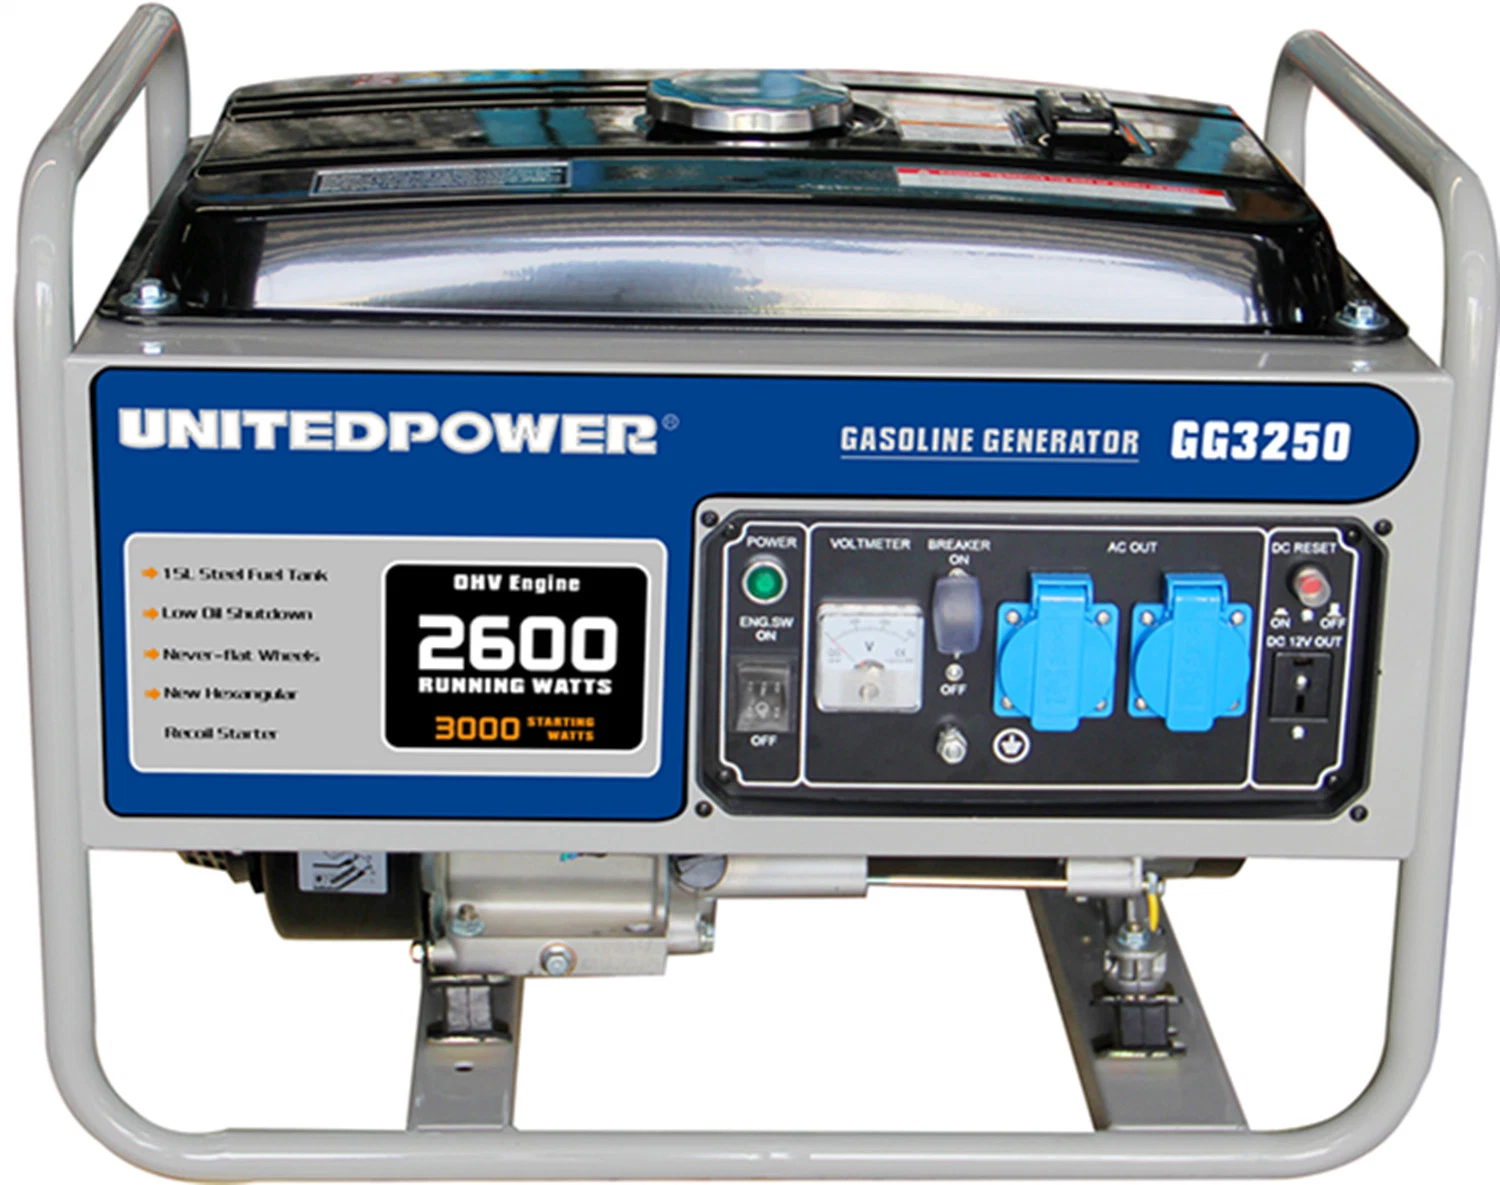 Unitedpower Electric Portable Power Equipment Gasoline Petrol Gas Generator for Home Use